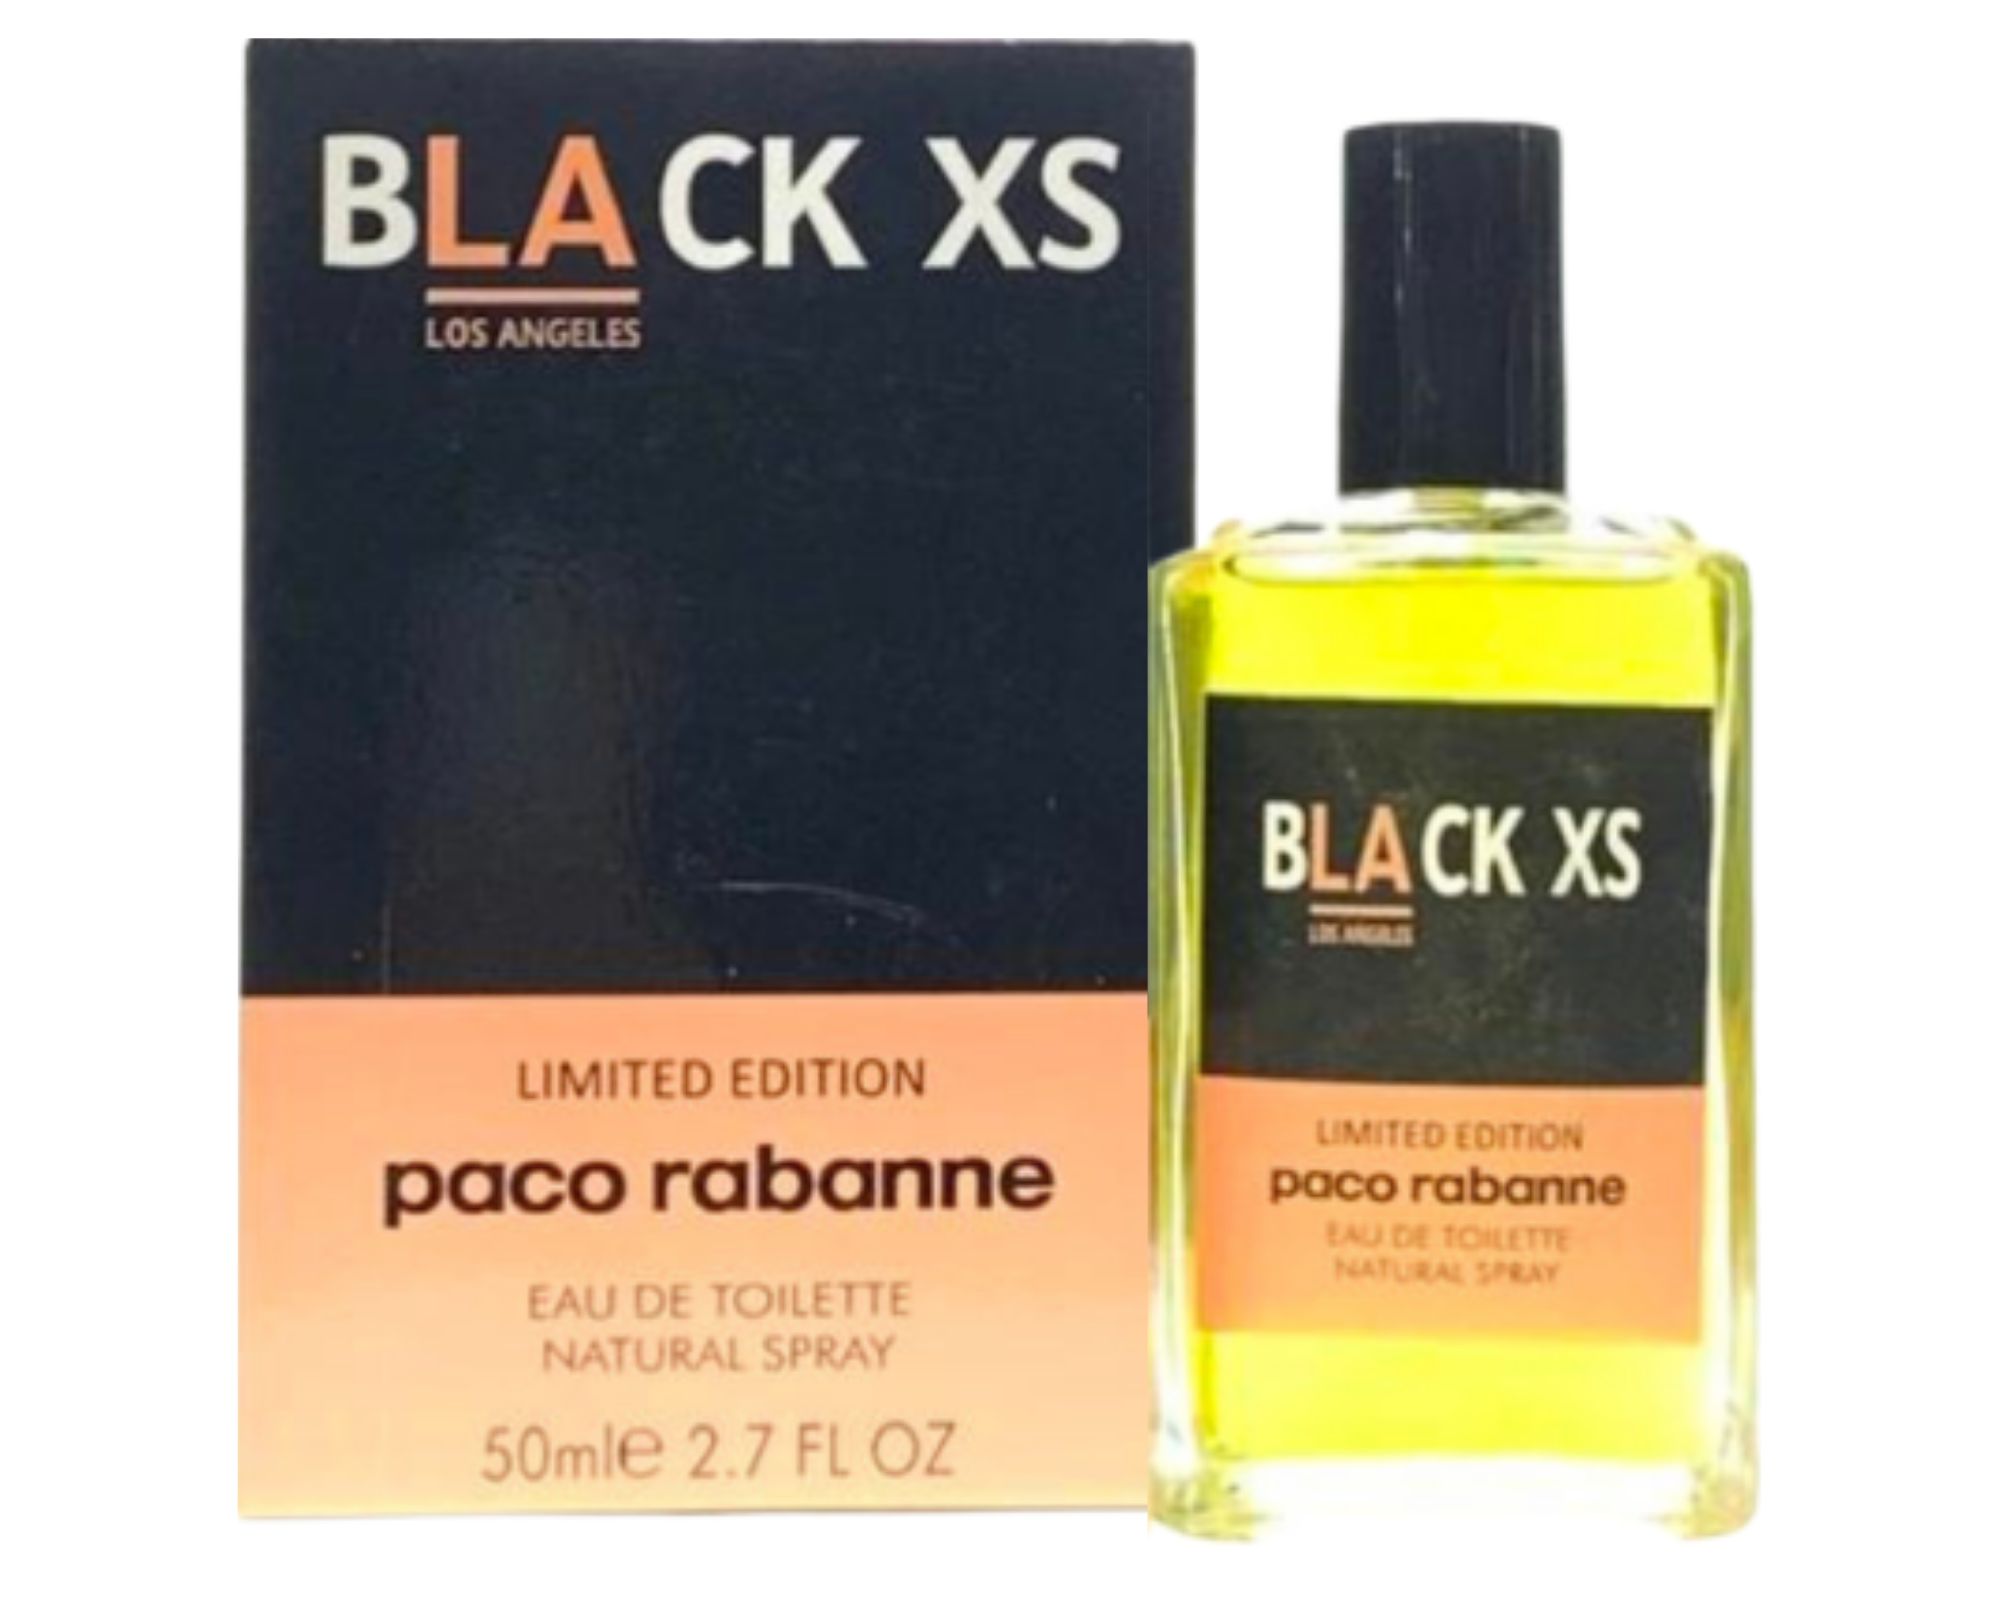 Perfume Contratipo Paco Rabanne - Black XS Los Angeles - 50ml